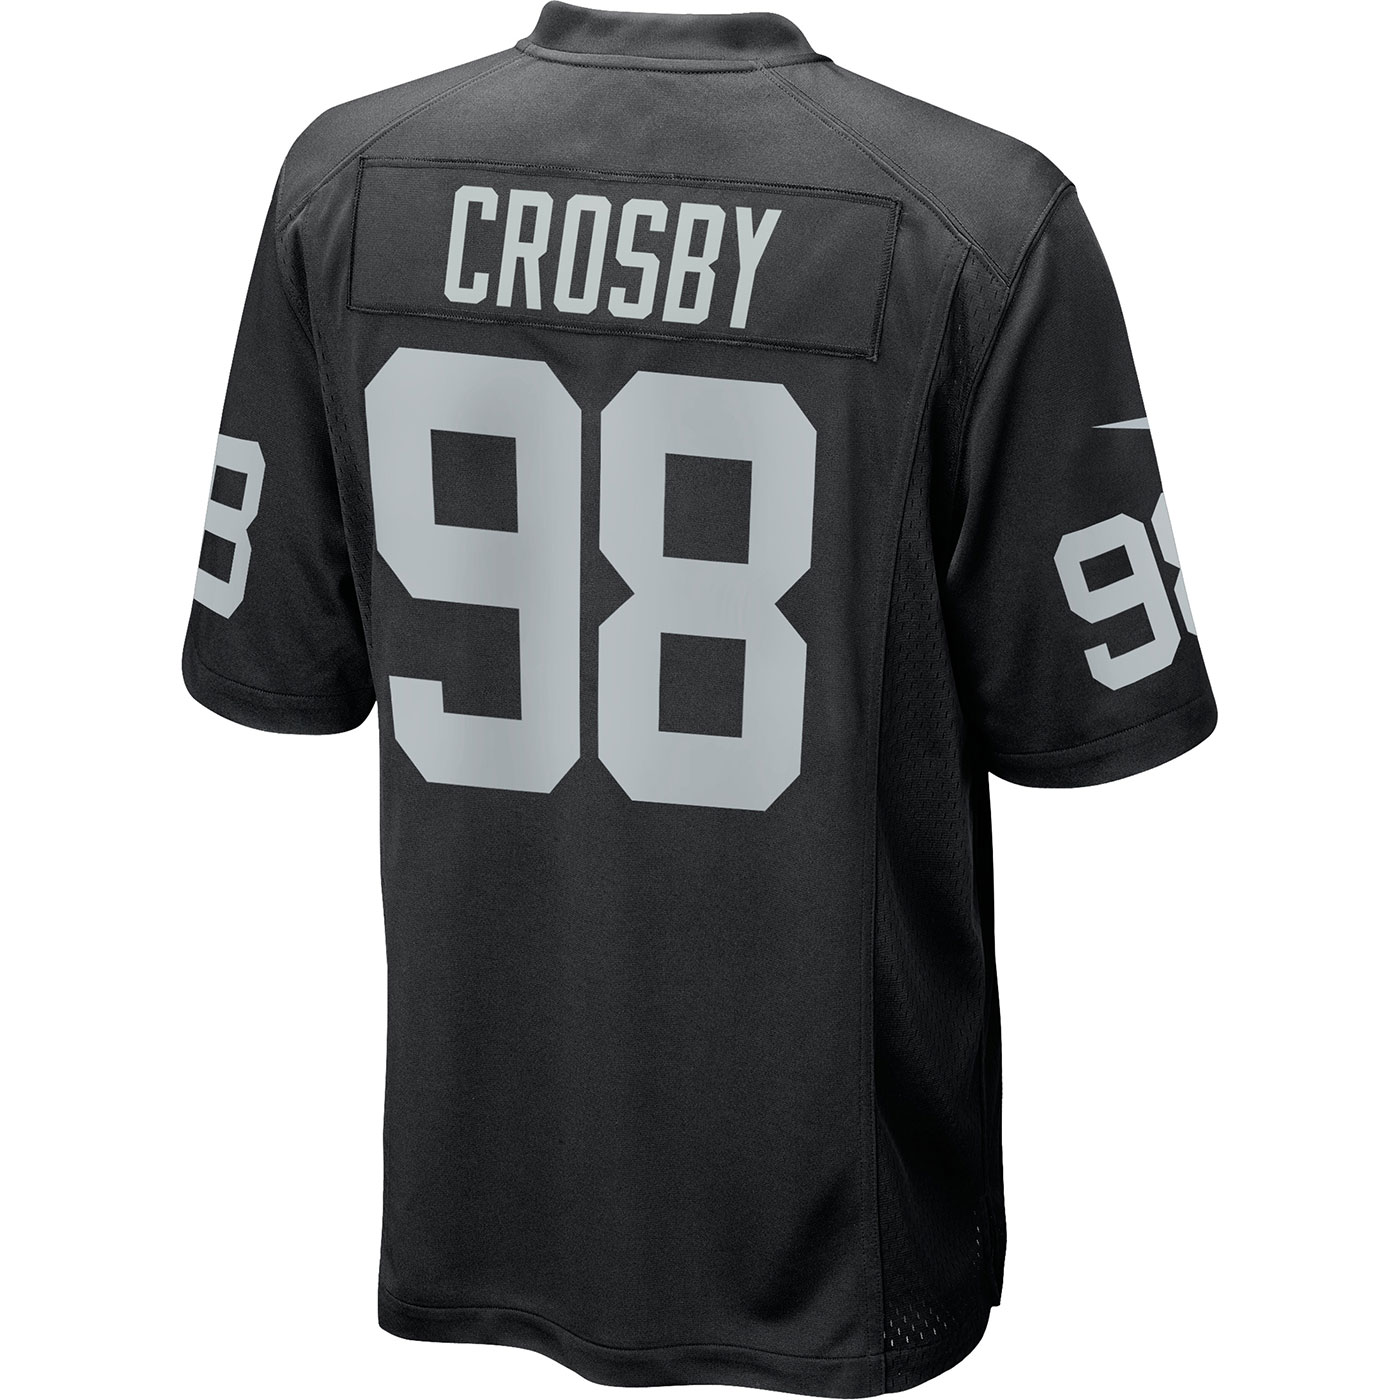 Nike Maxx Crosby Game Jersey - Black - S